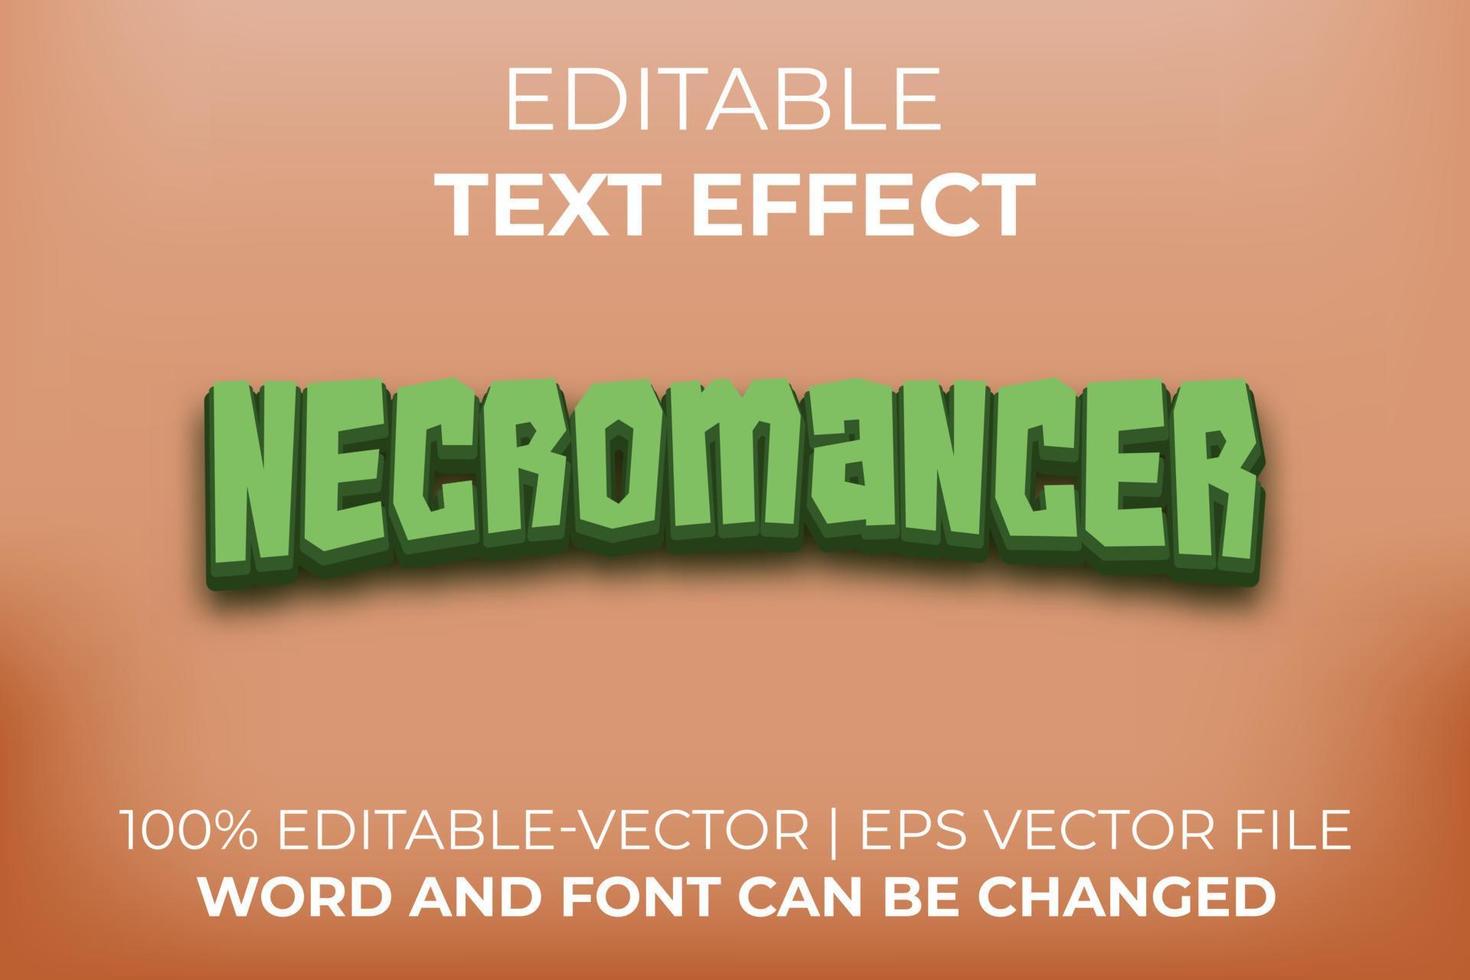 Necromancer text effect, easy to edit vector